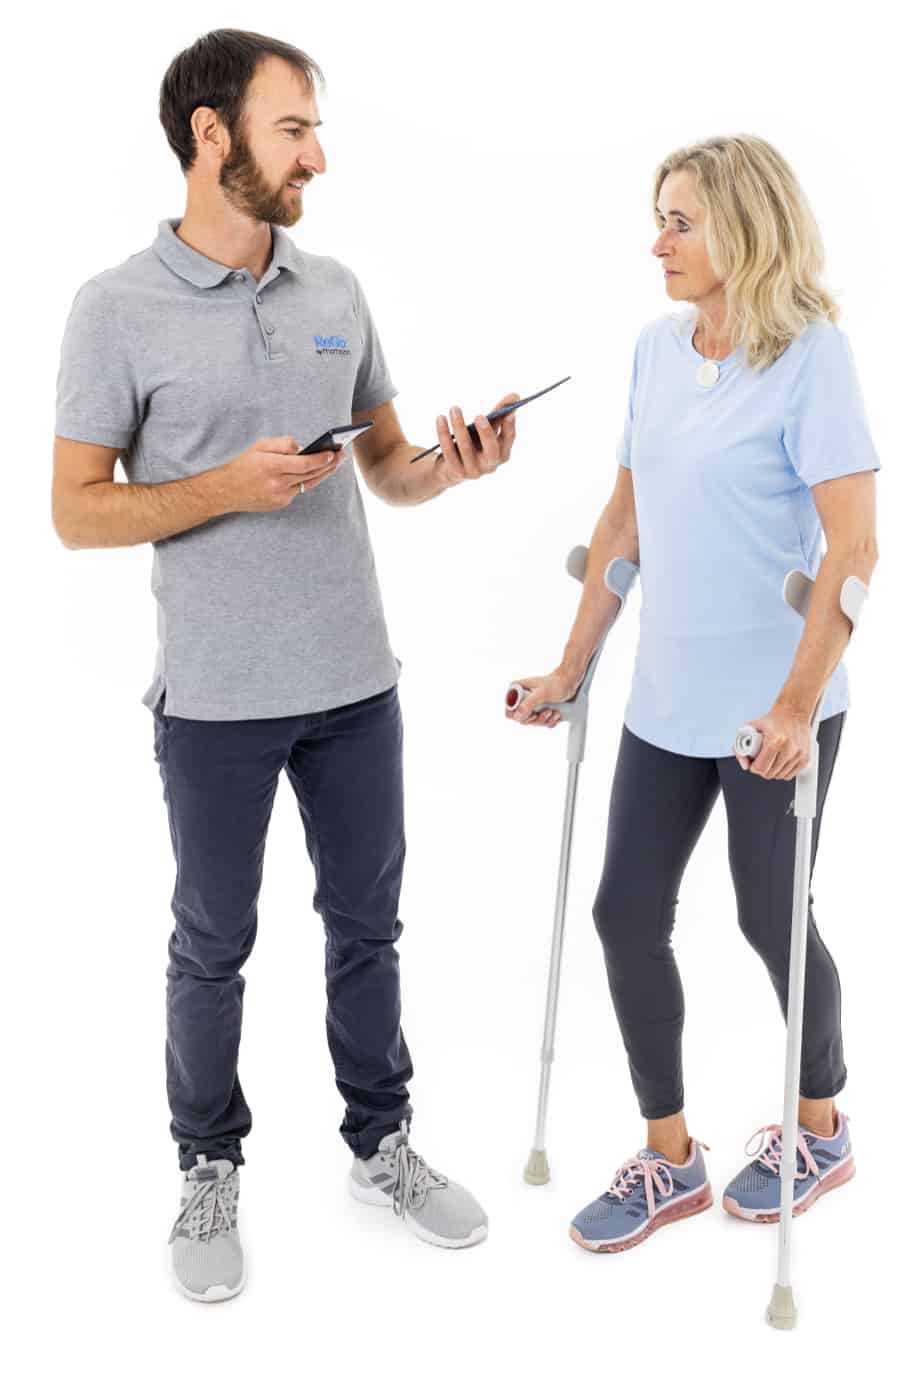 moticon-rego-sensor-insoles-app-consulting-woman-crutches